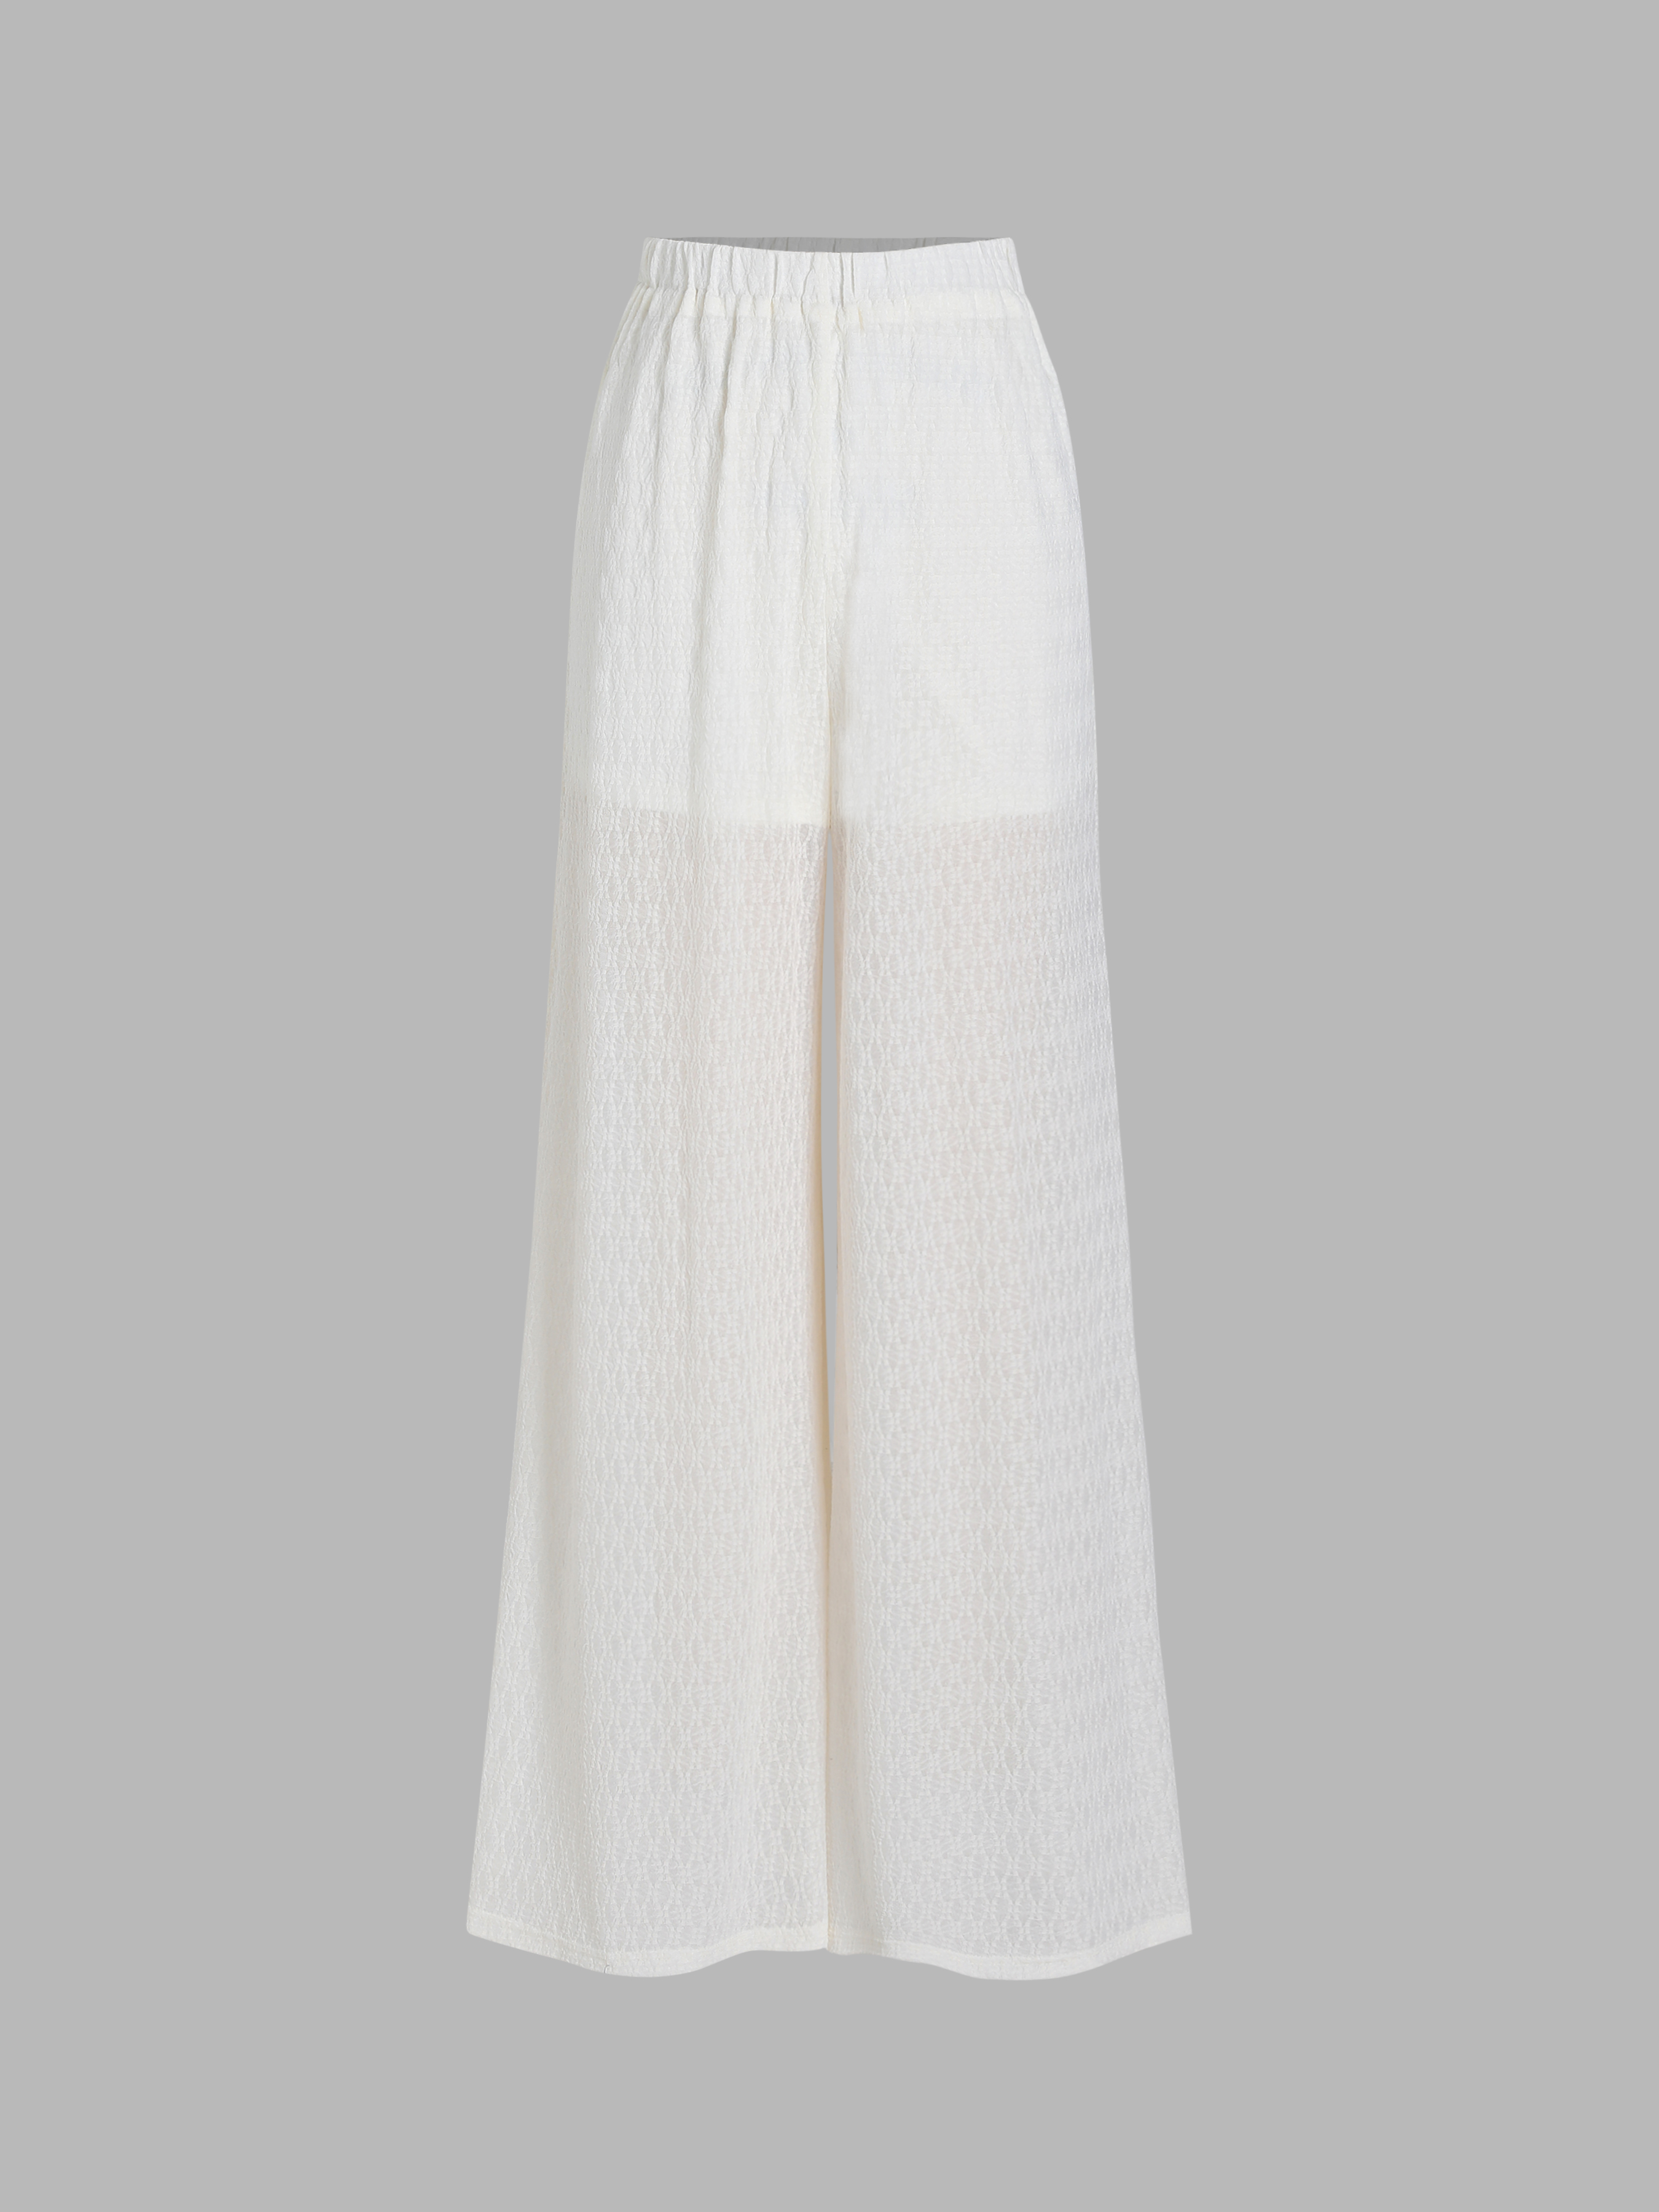 Moomaya Printed Elastic Waist Wide Leg Lace Palazzo Pants With Lace Casual  Cotton Bottoms - Walmart.com